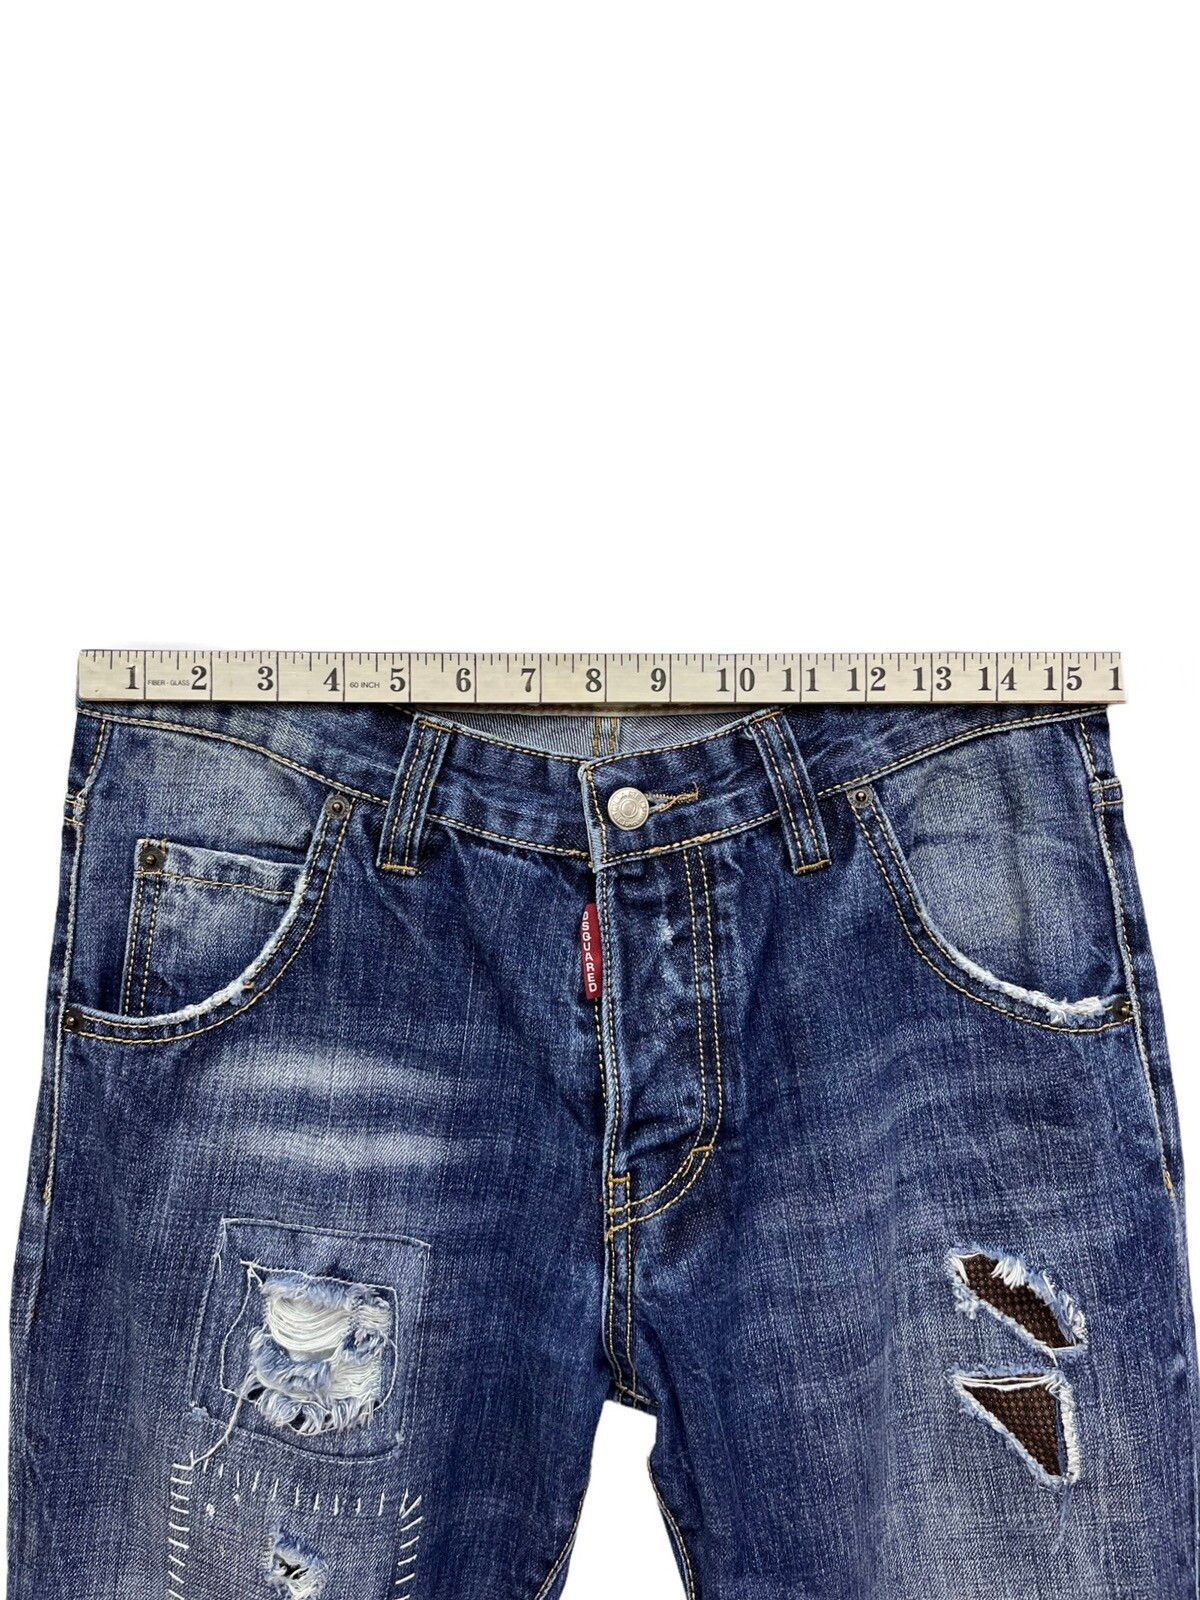 Vintage 🔥DSQUARED Grunge Distressed Patchwork Slim Fit Jeans Size US 30 / EU 46 - 15 Preview